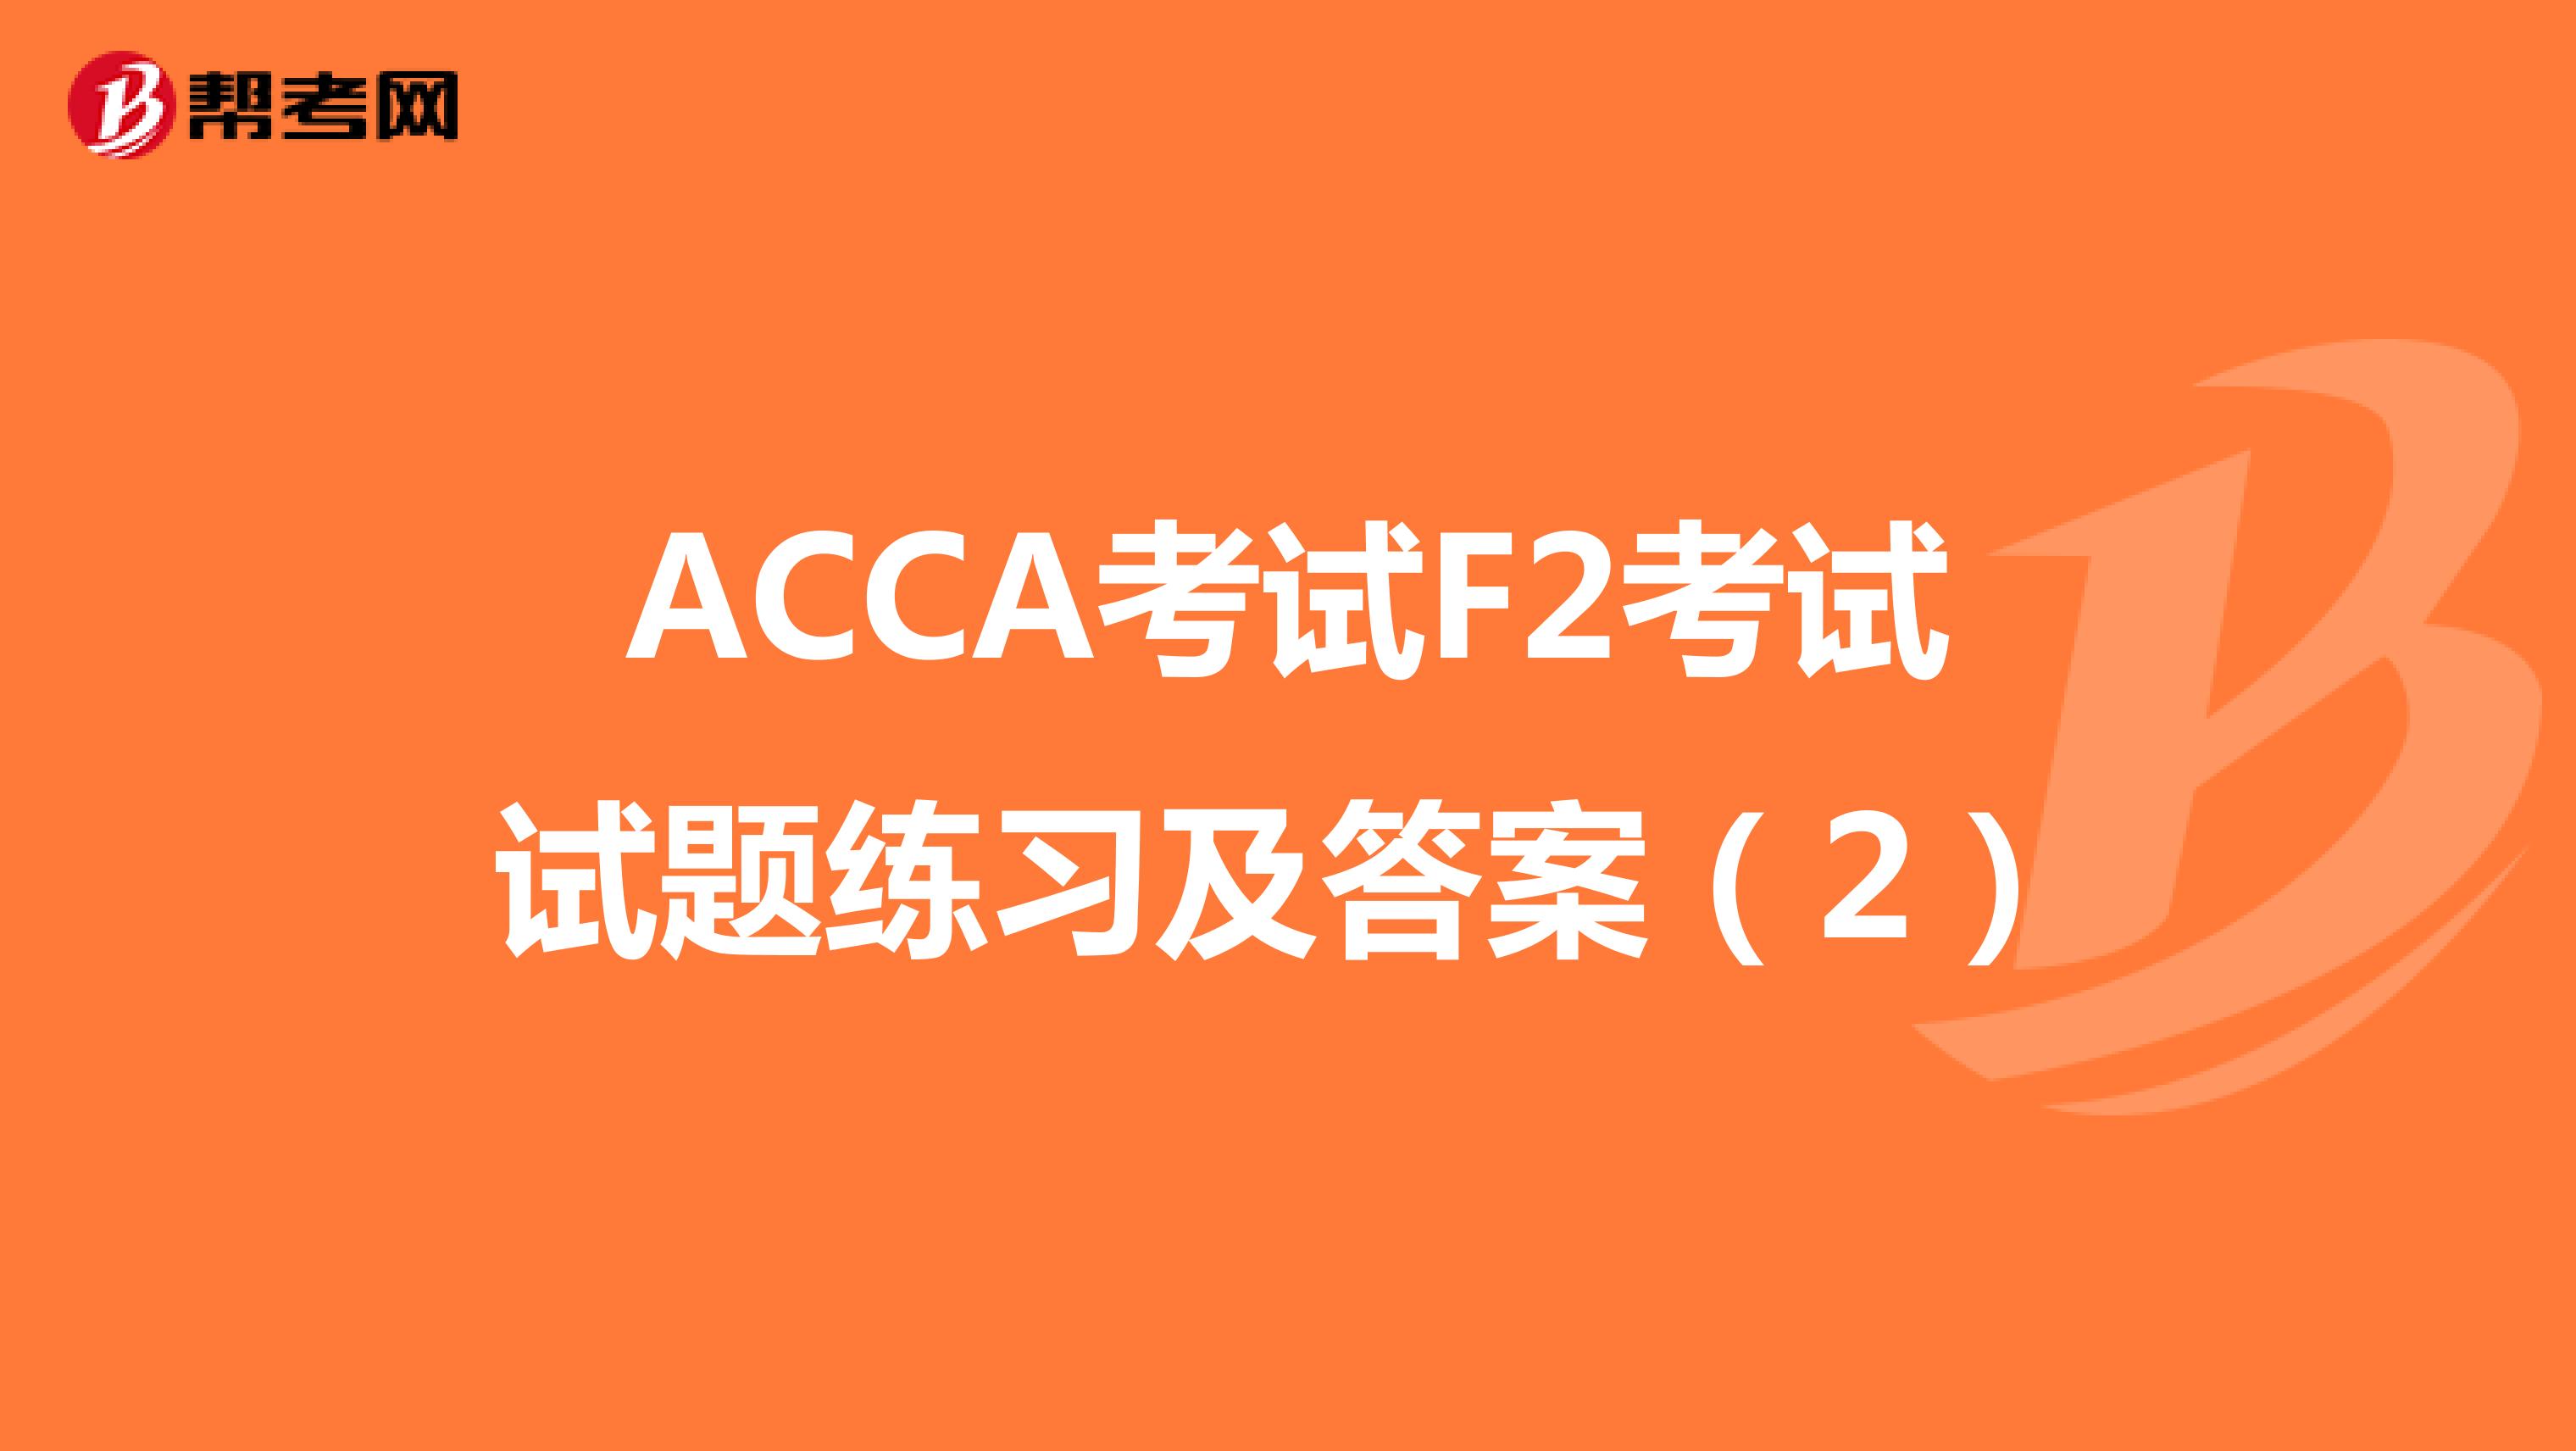 ACCA考试F2考试试题练习及答案（2）